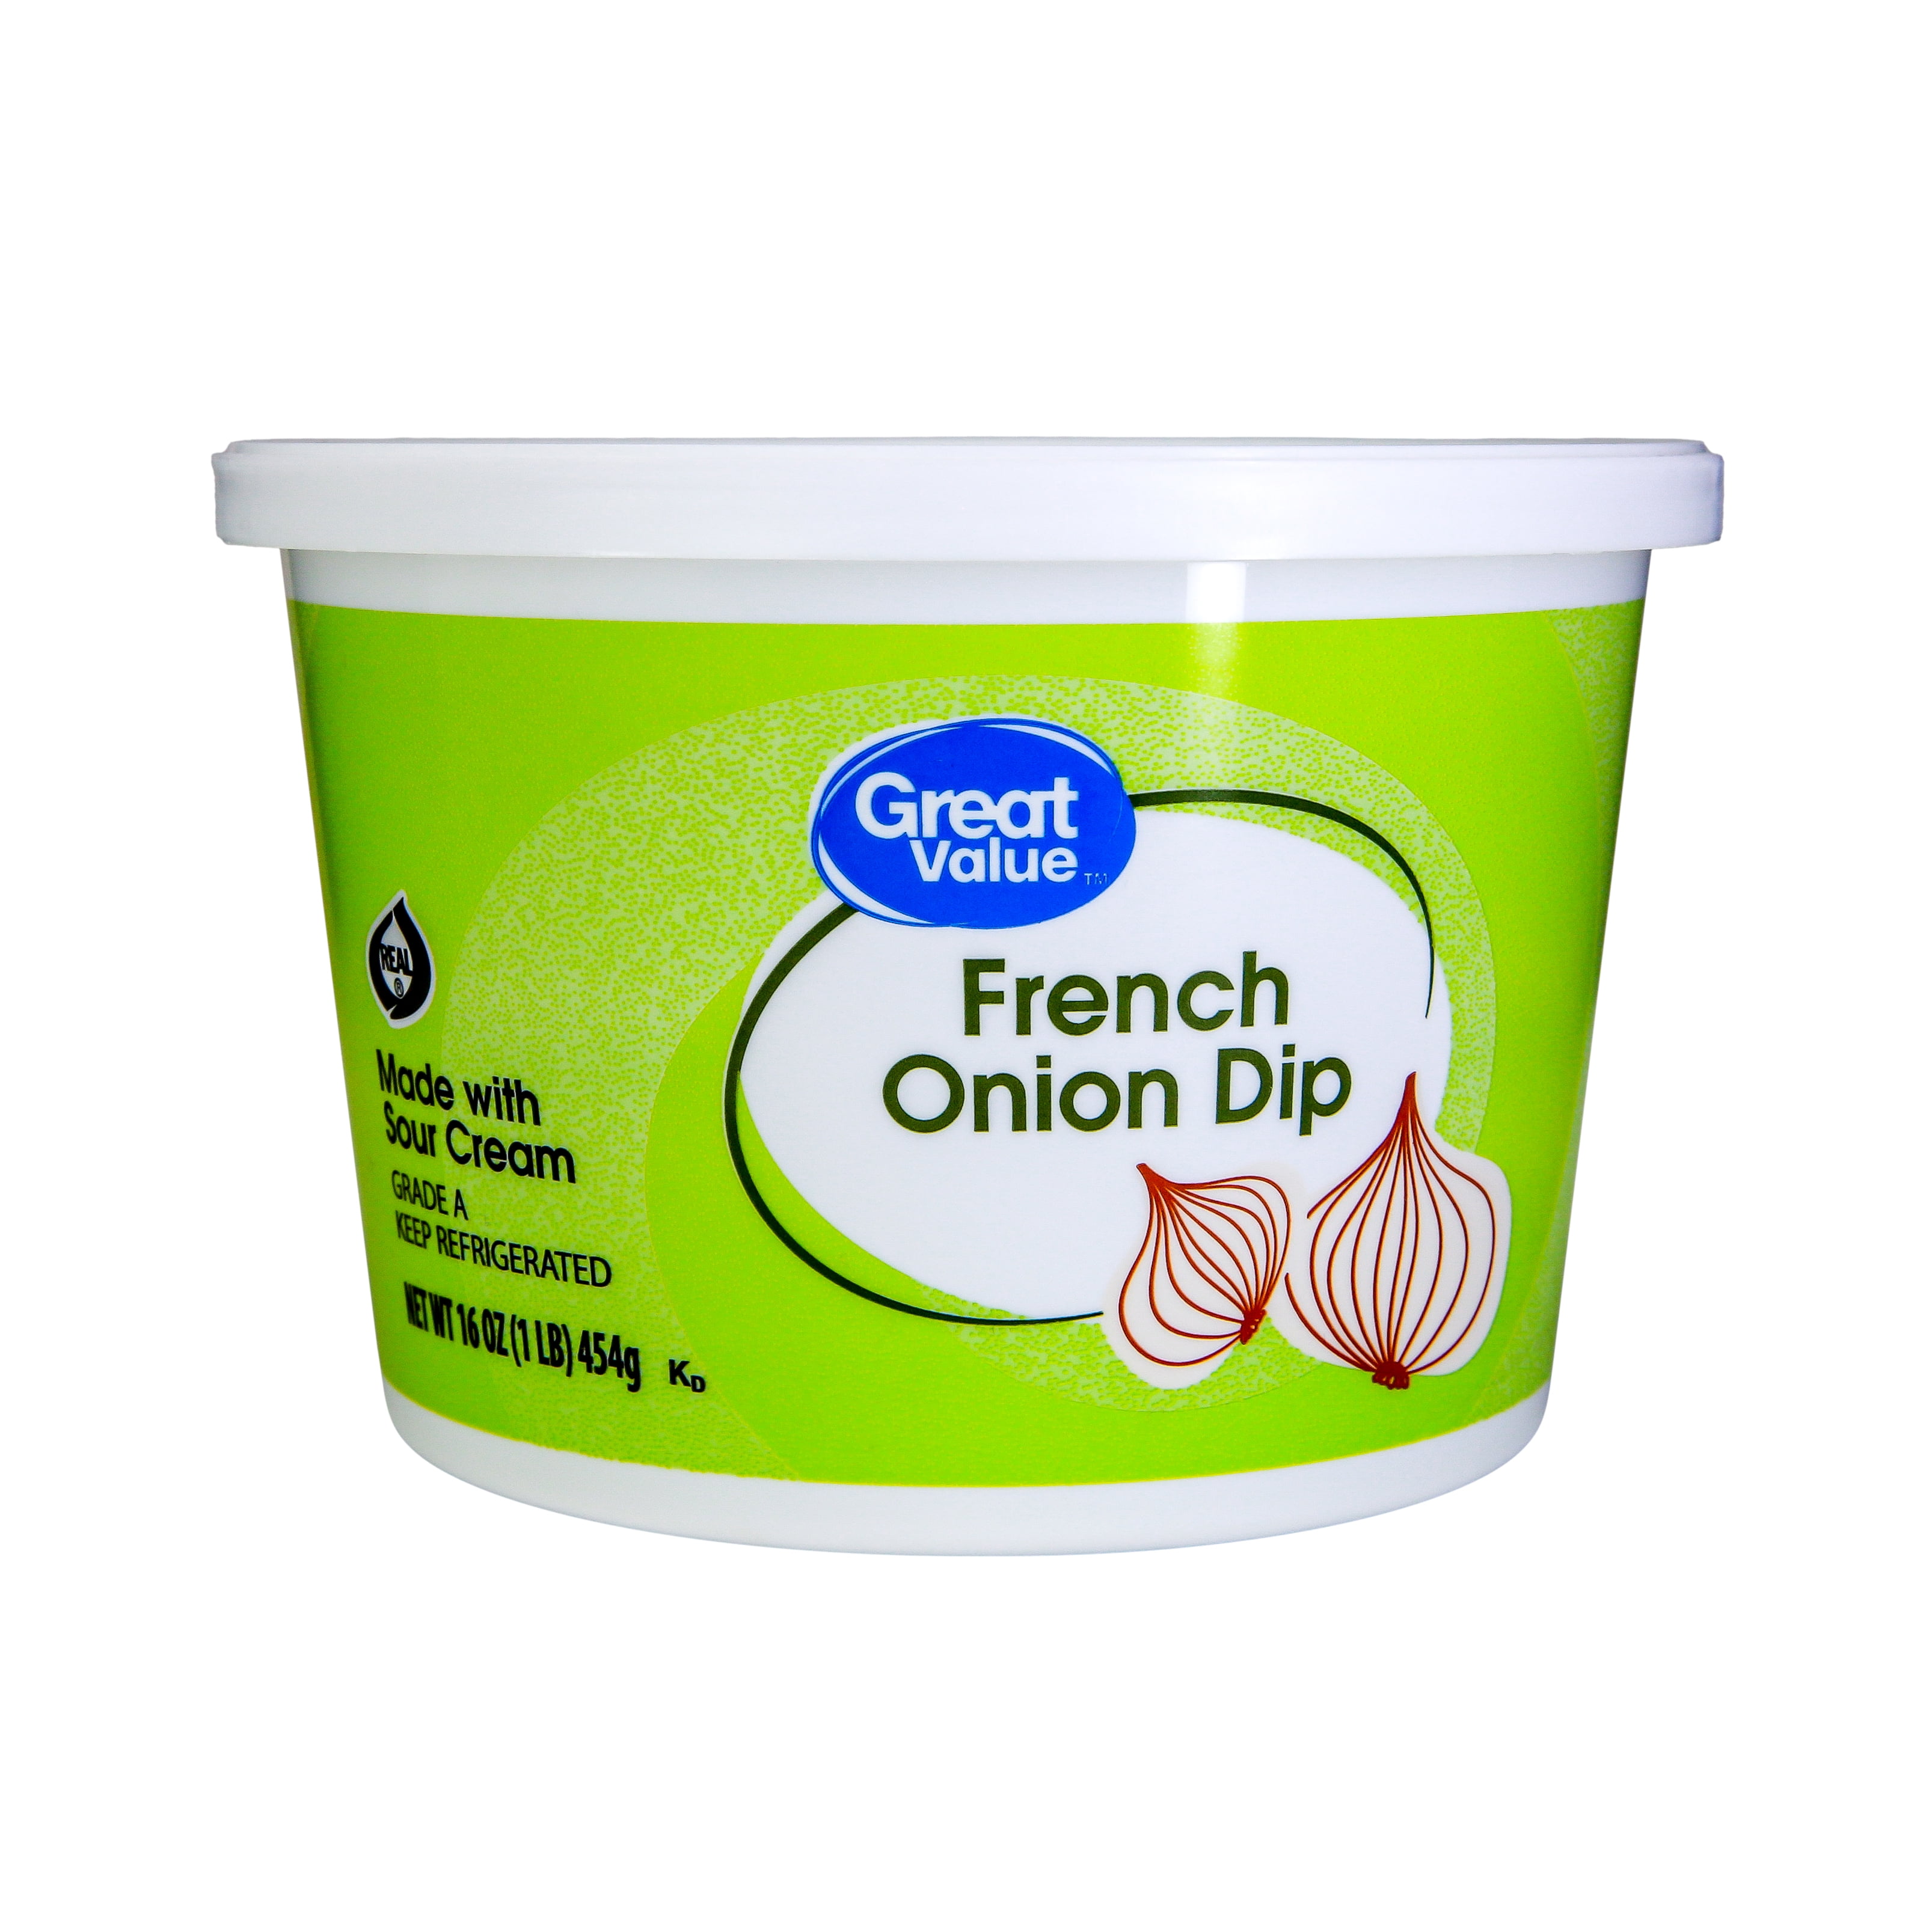 Great Value French Onion Dip, 16 oz Tub